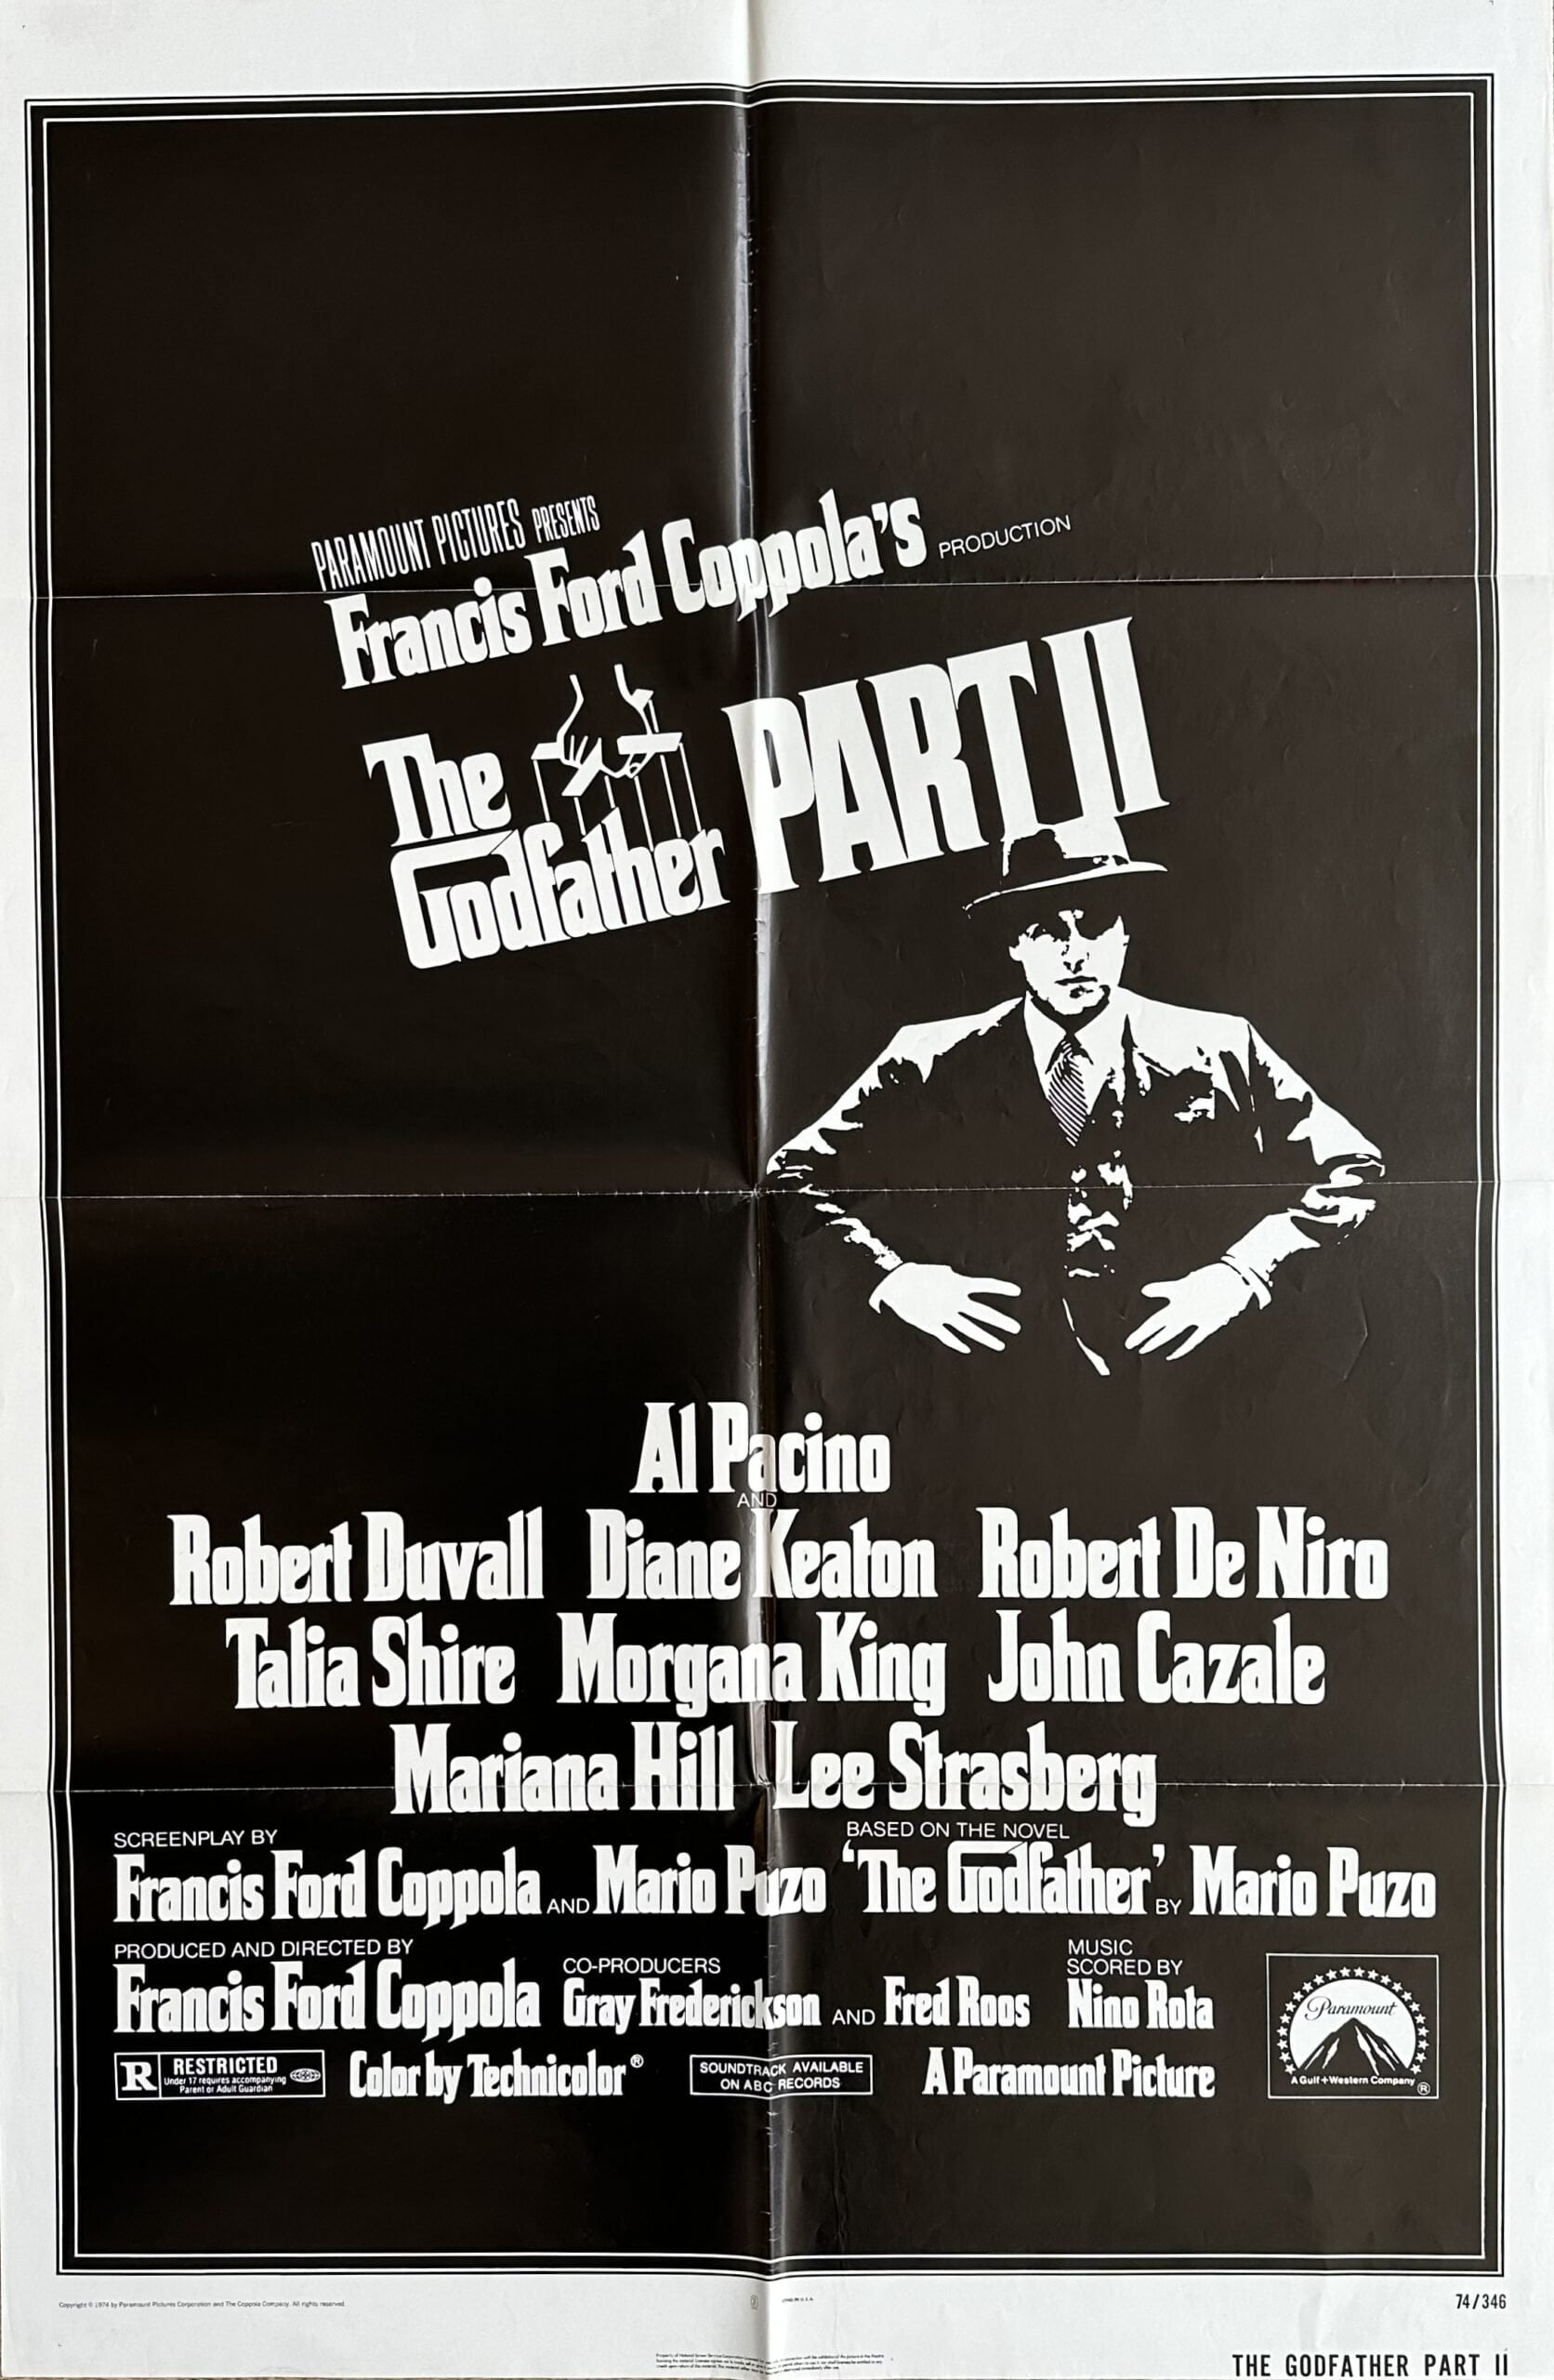 Original vintage cinema movie poster for The Godfather Part II, starring Al Pacino and Robert De Niro